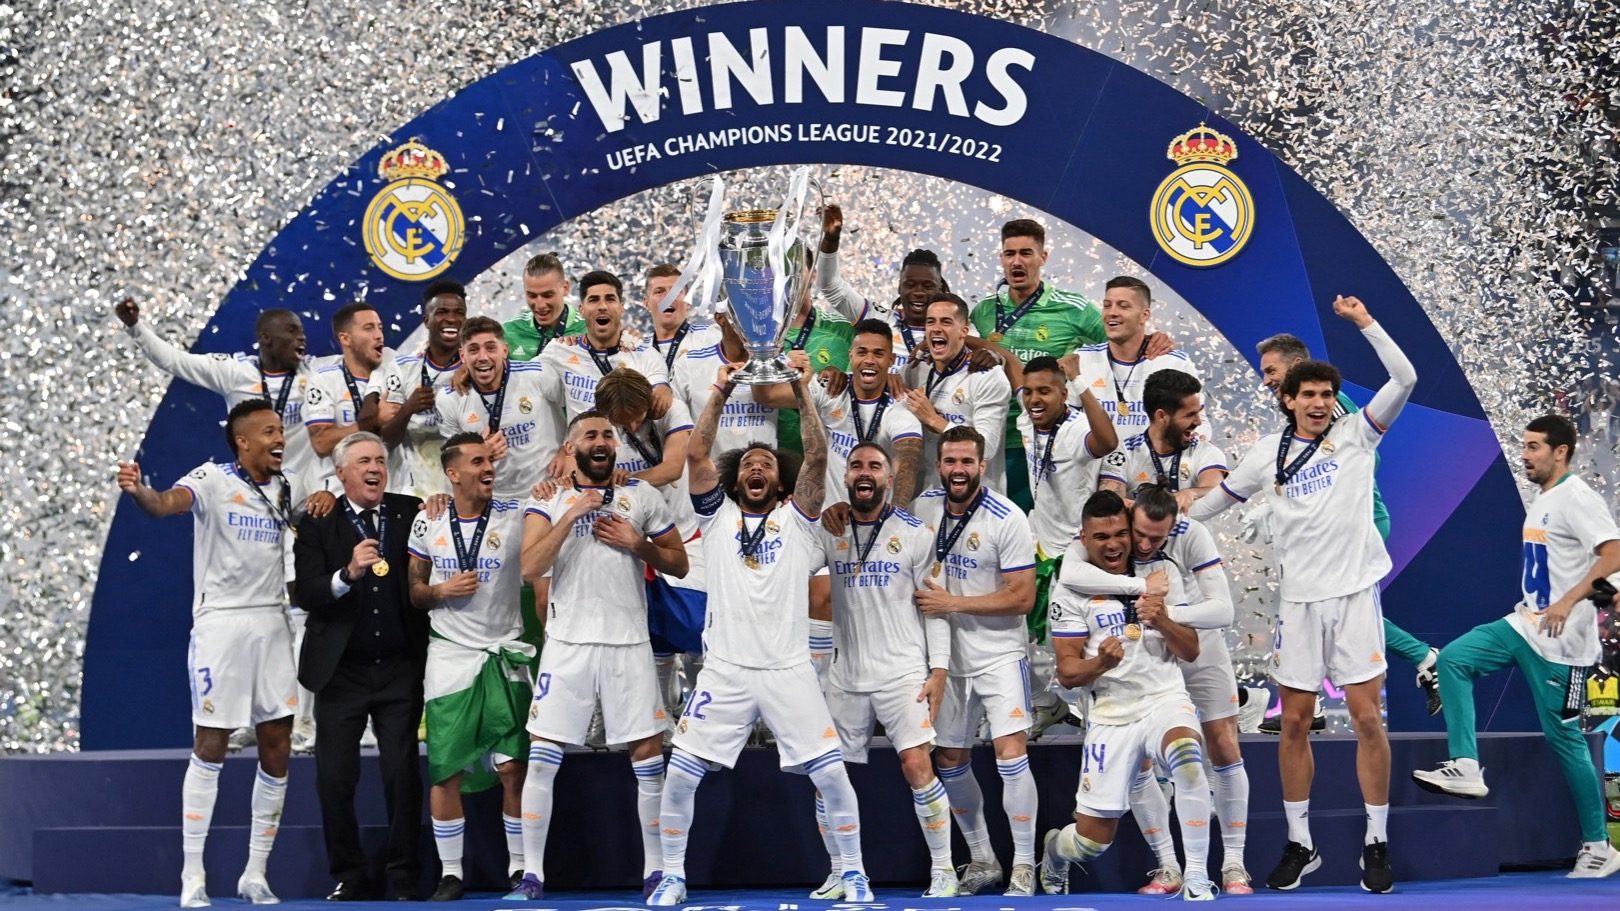 Real Madrid: Meet the 2021/22 UEFA Champions League winners